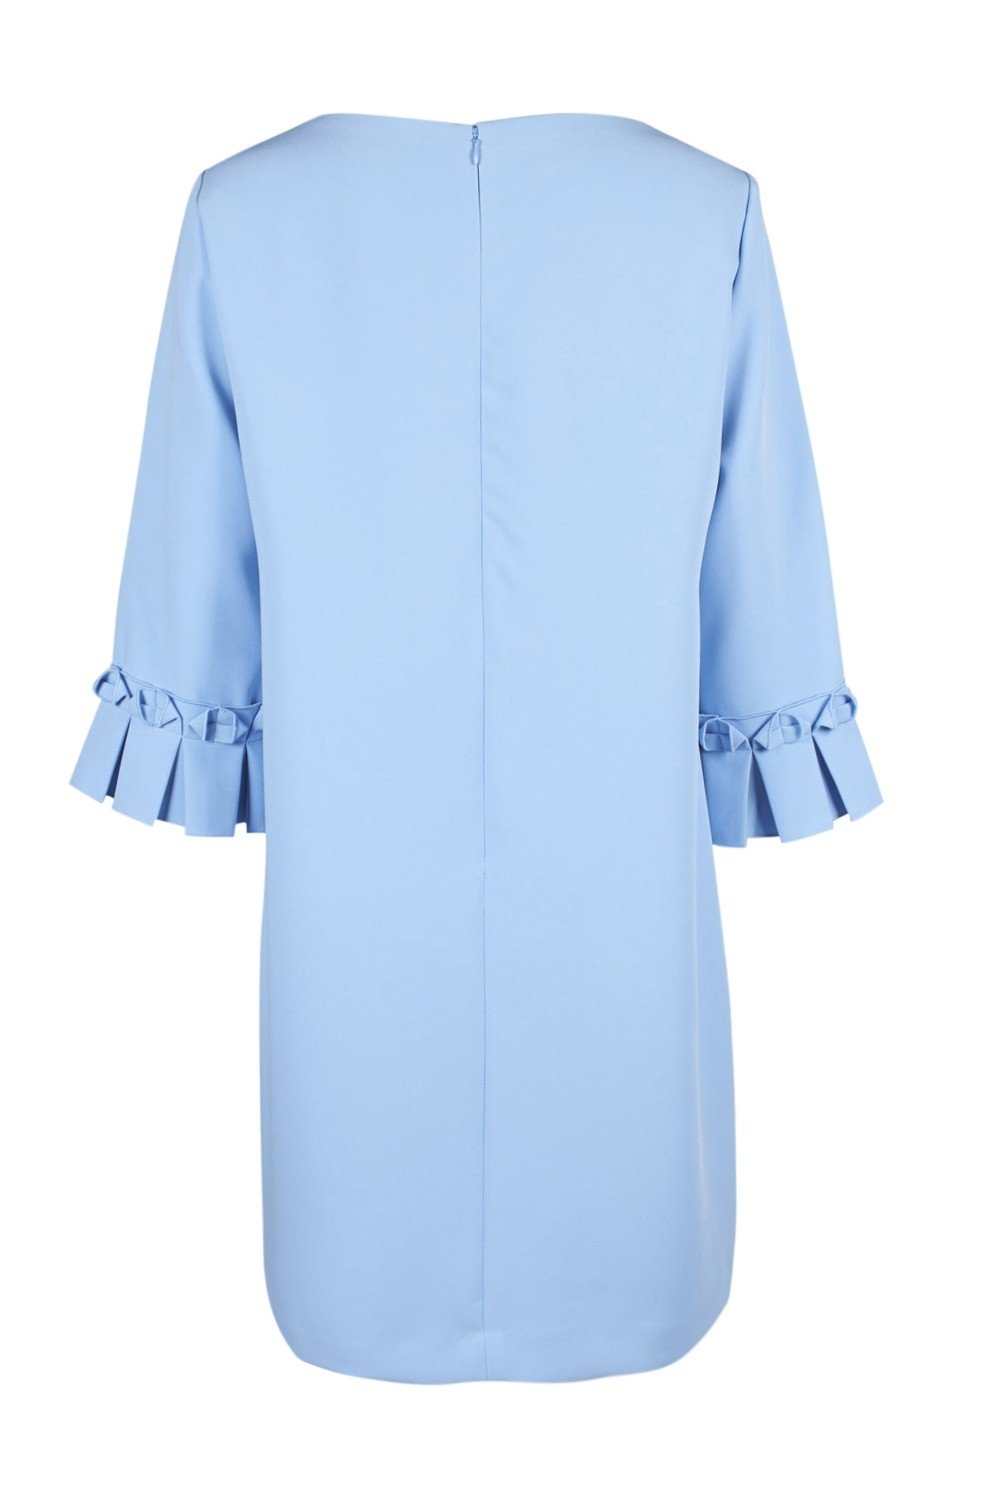 Tahari Asl - TLMU9WD682 Origami Detailed Scoop A-line Dress In Blue